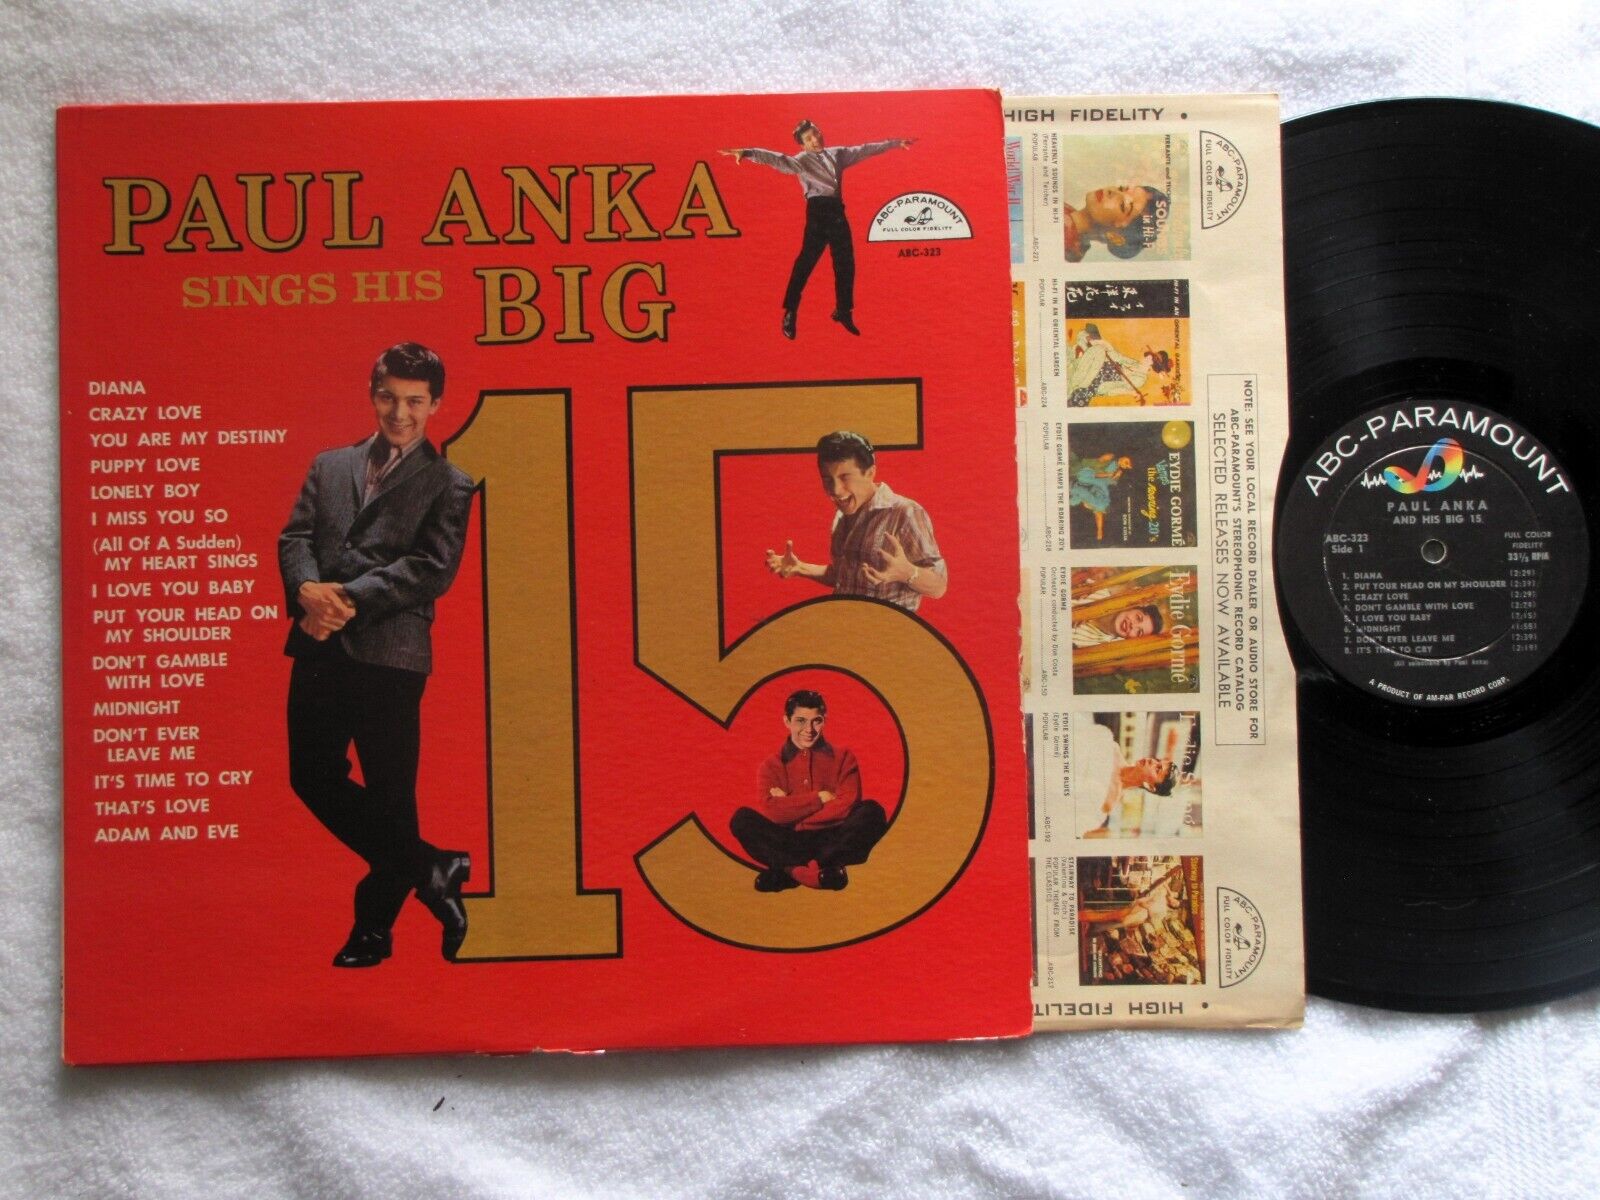 PAUL ANKA *Sings His Big 15* 1960 Excellent Vinyl ABC-Paramount Records Mono LP